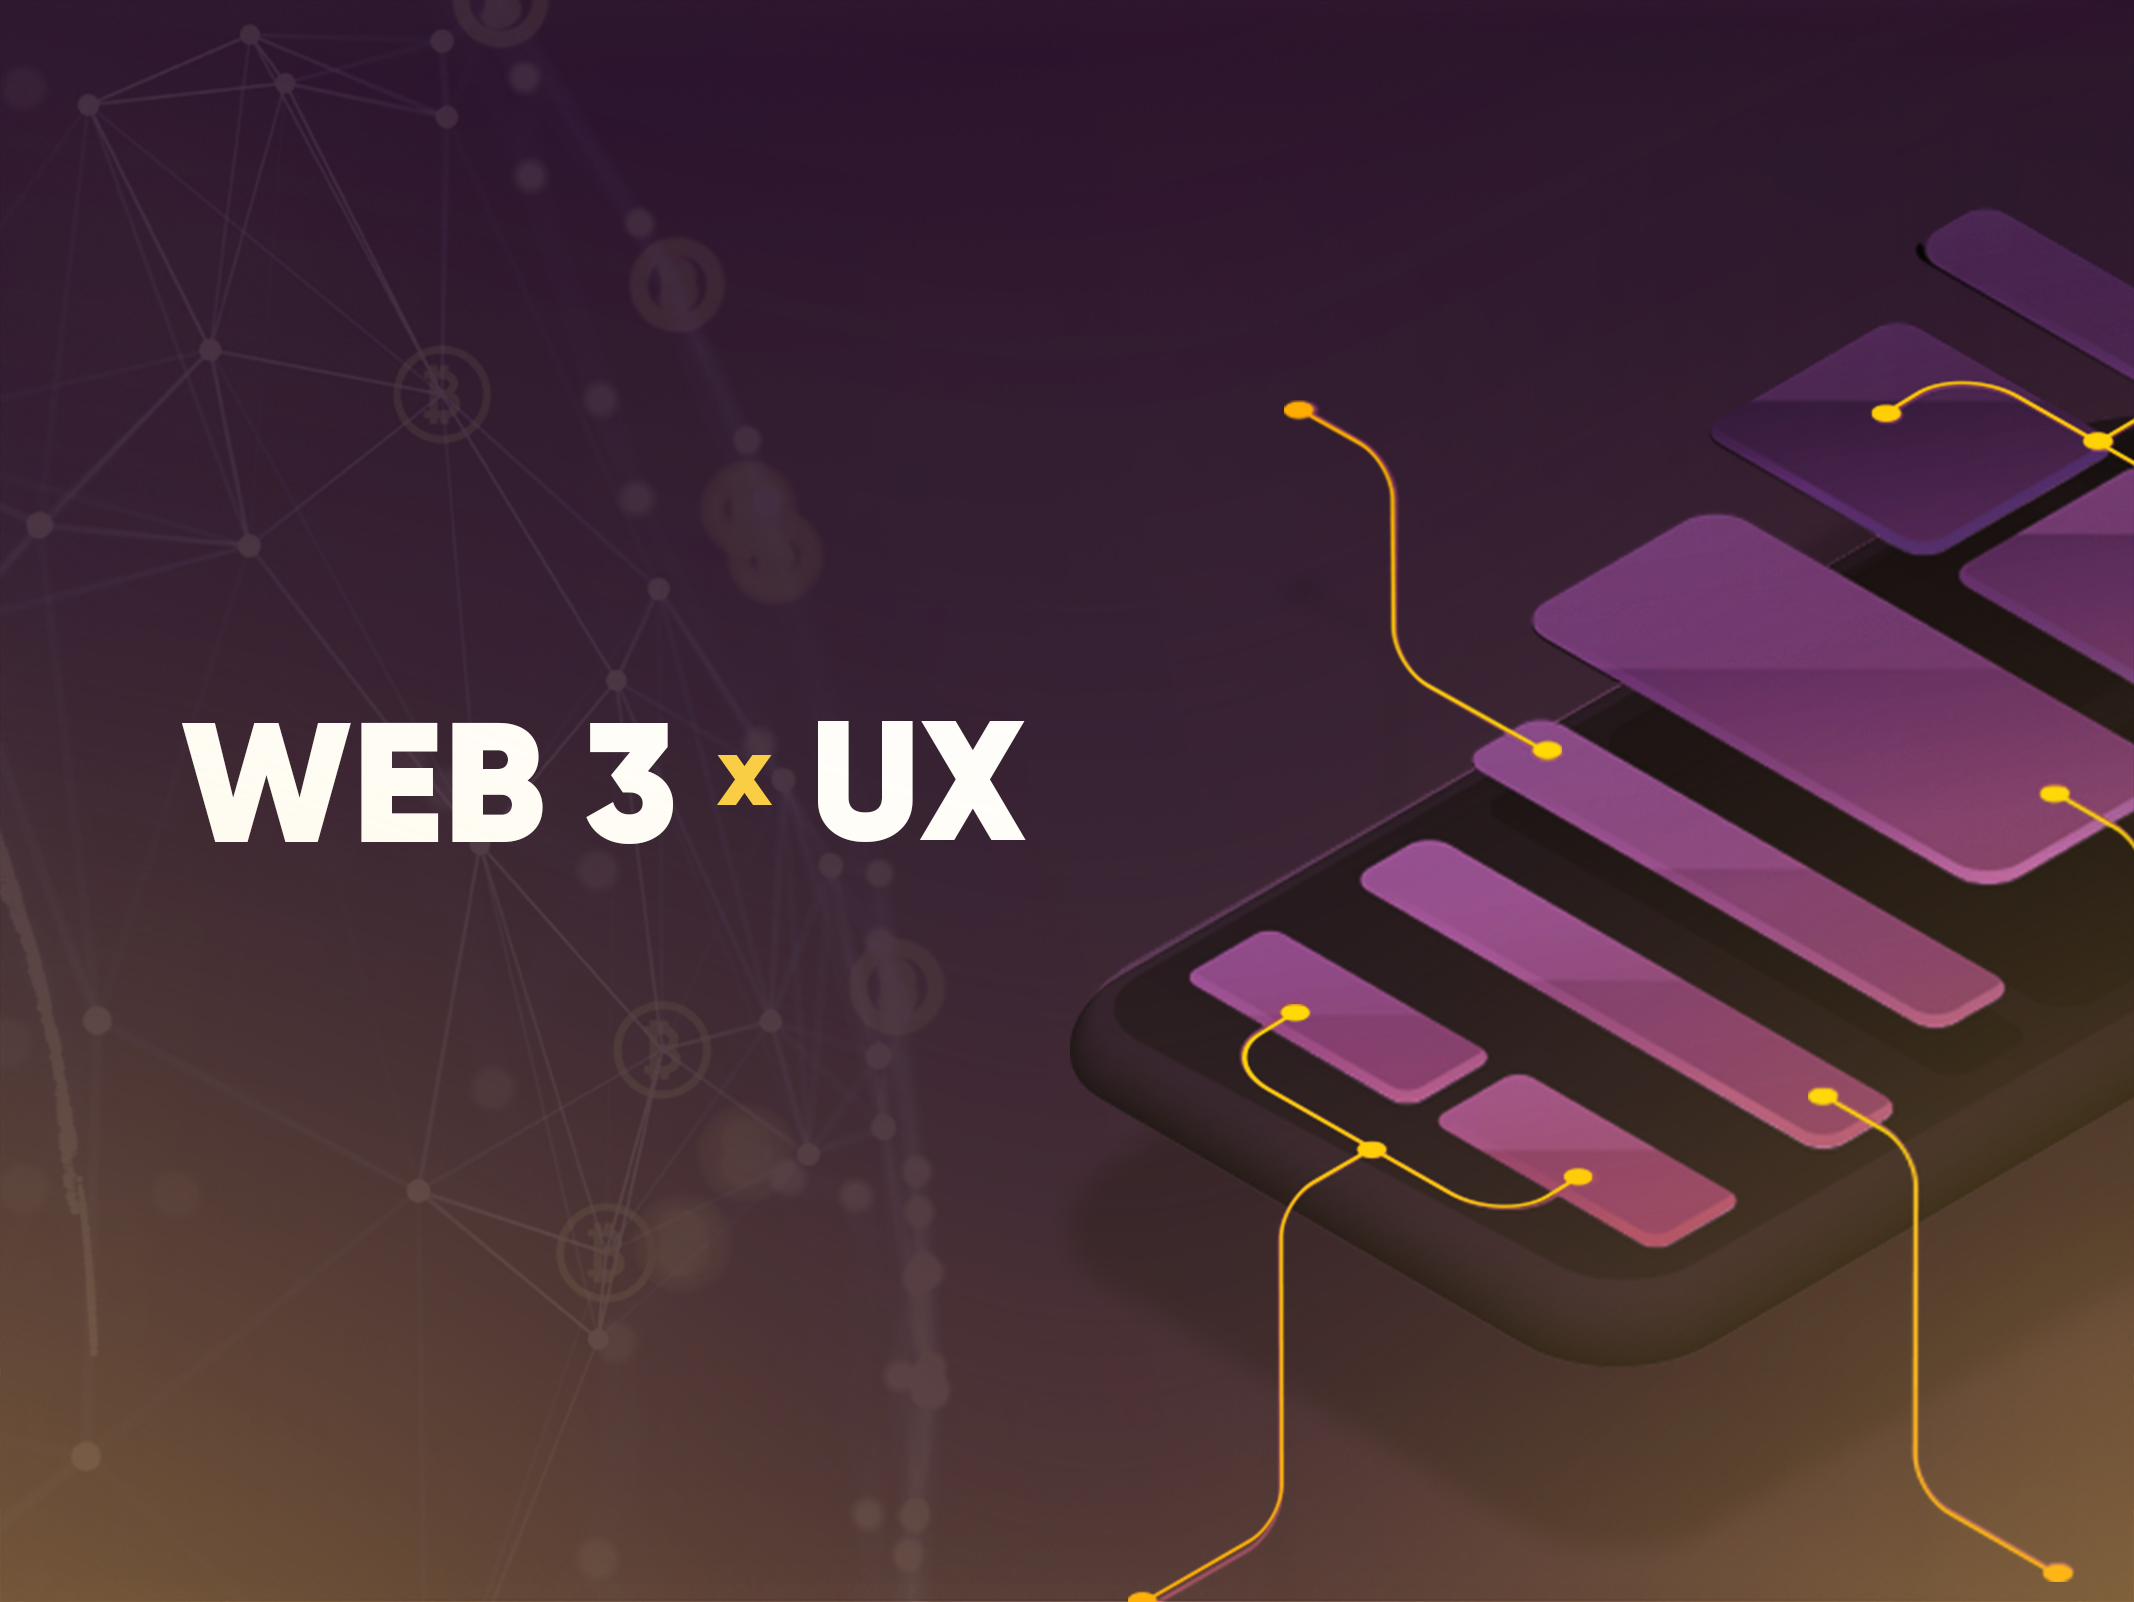 Web 3.0 UX